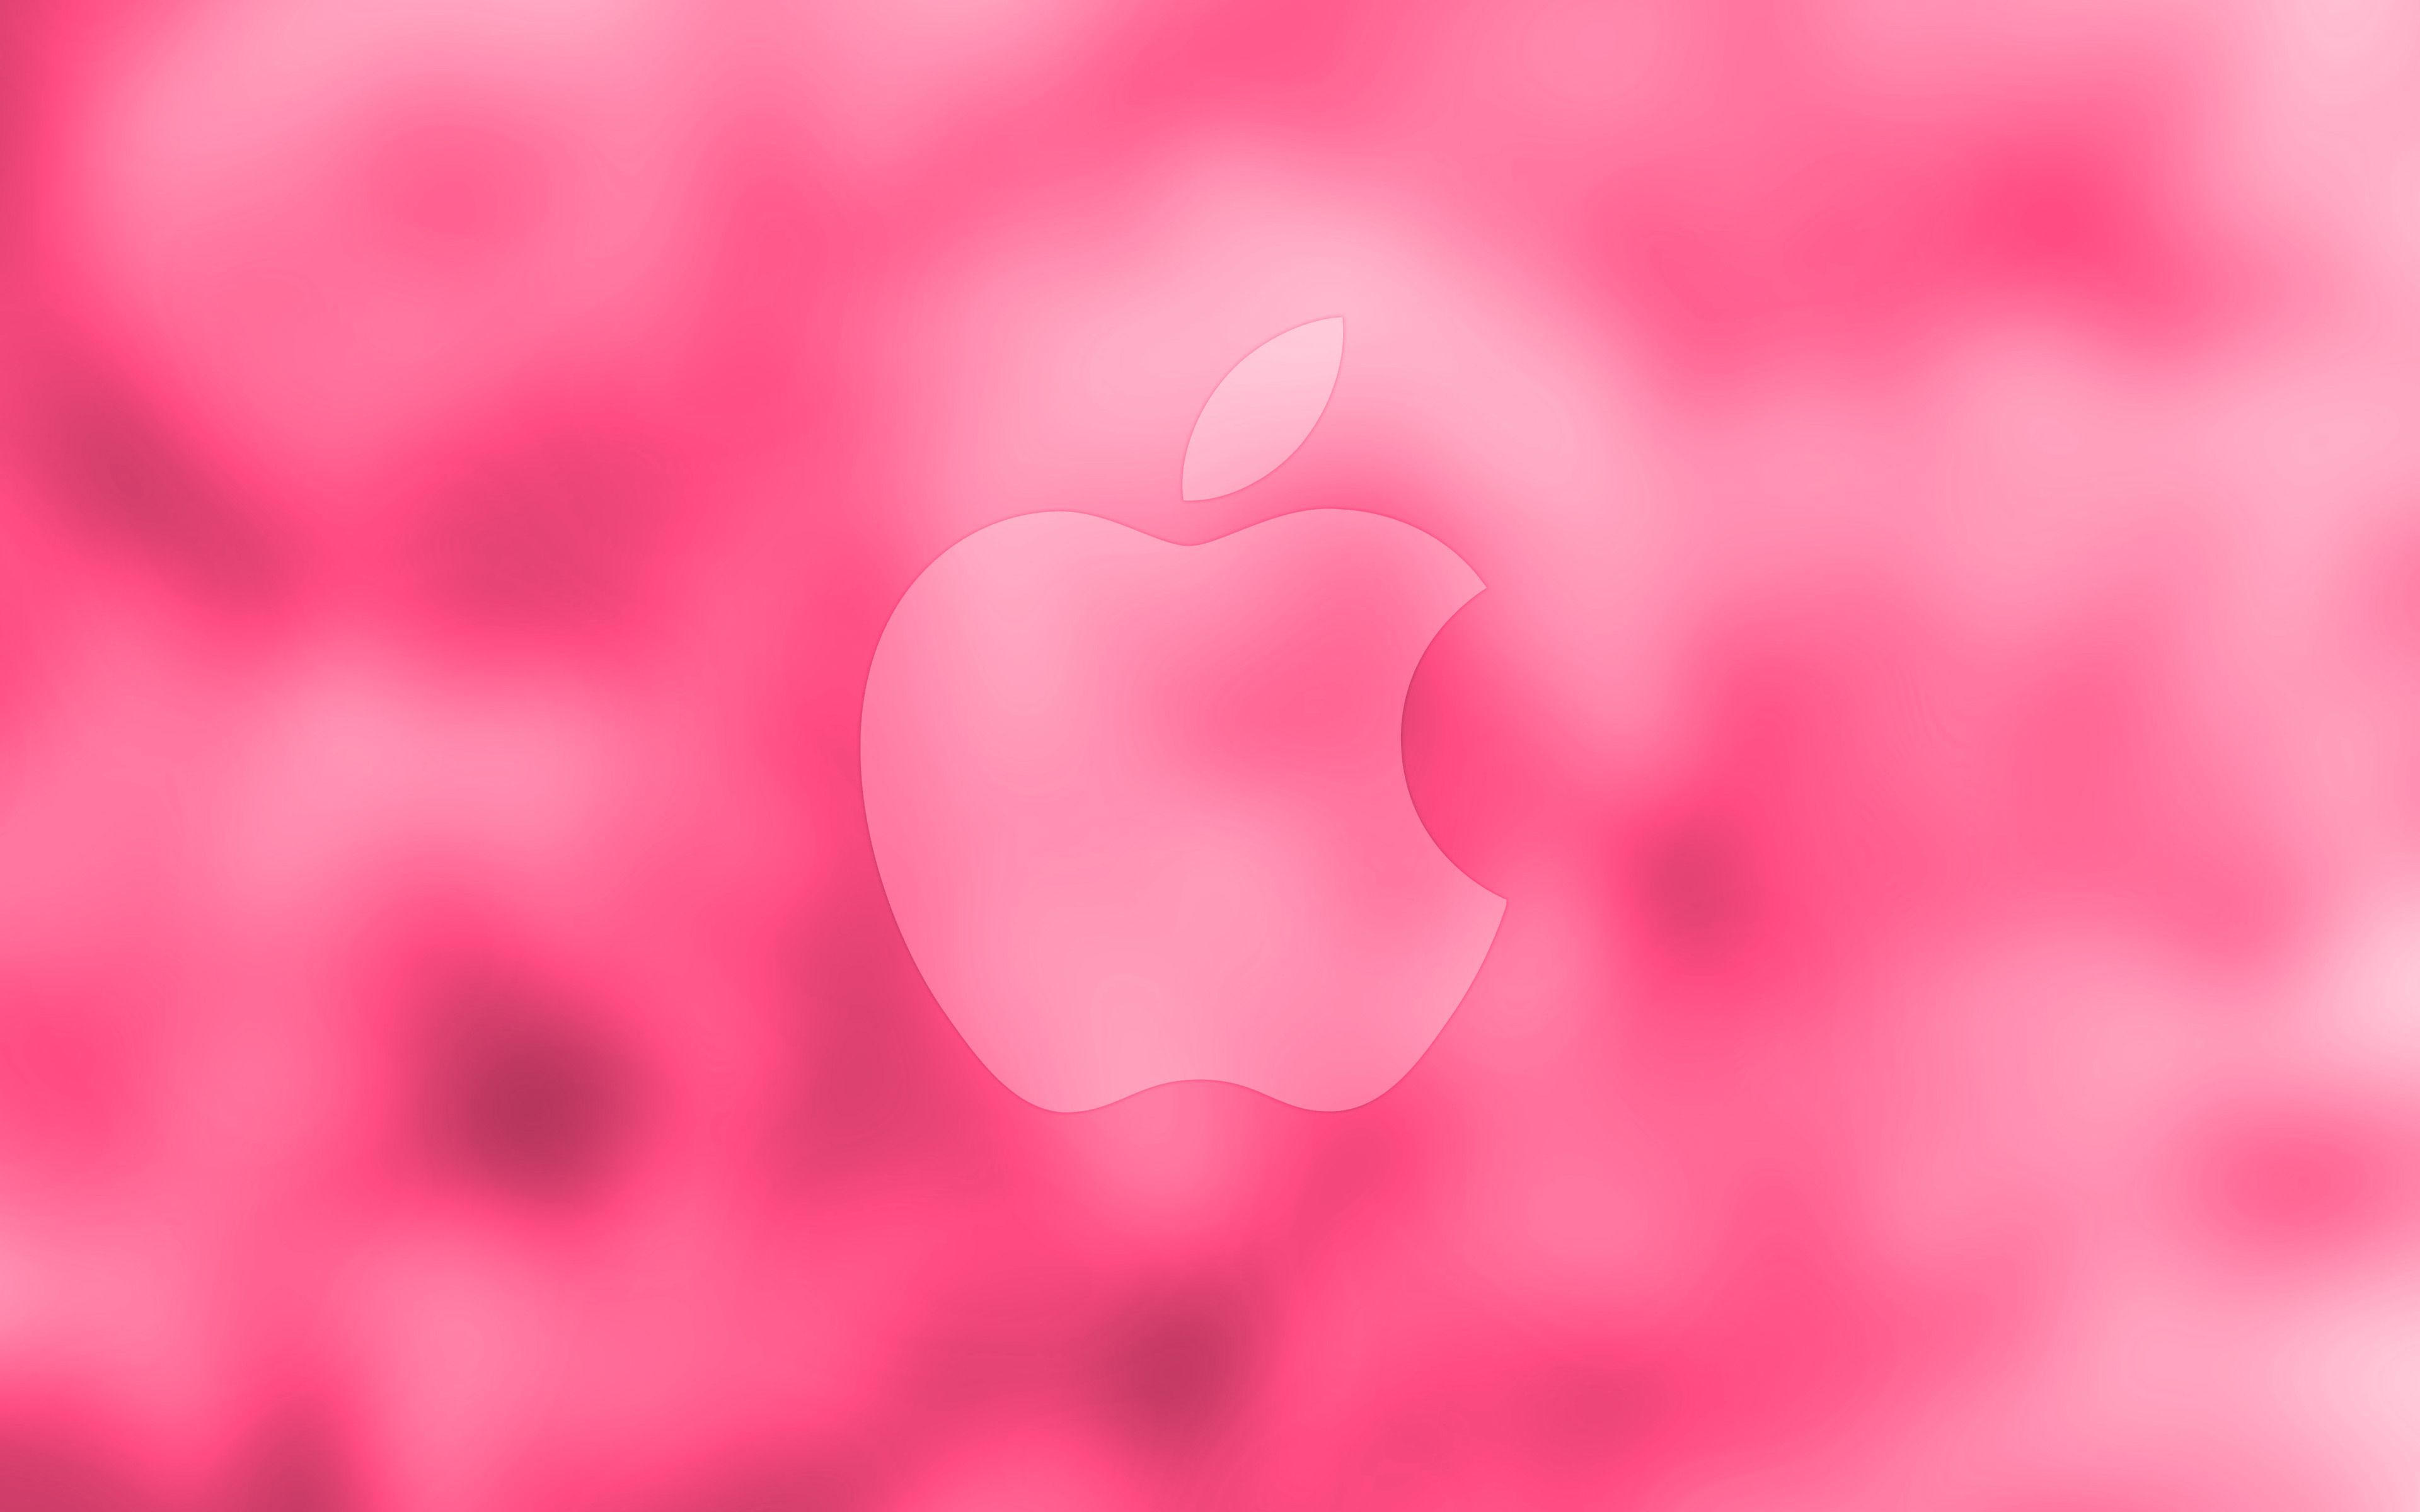 Download wallpaper Apple pink logo, 4k pink blurred background, Apple, minimal, Apple logo, artwork for desktop with resolution 3840x2400. High Quality HD picture wallpaper